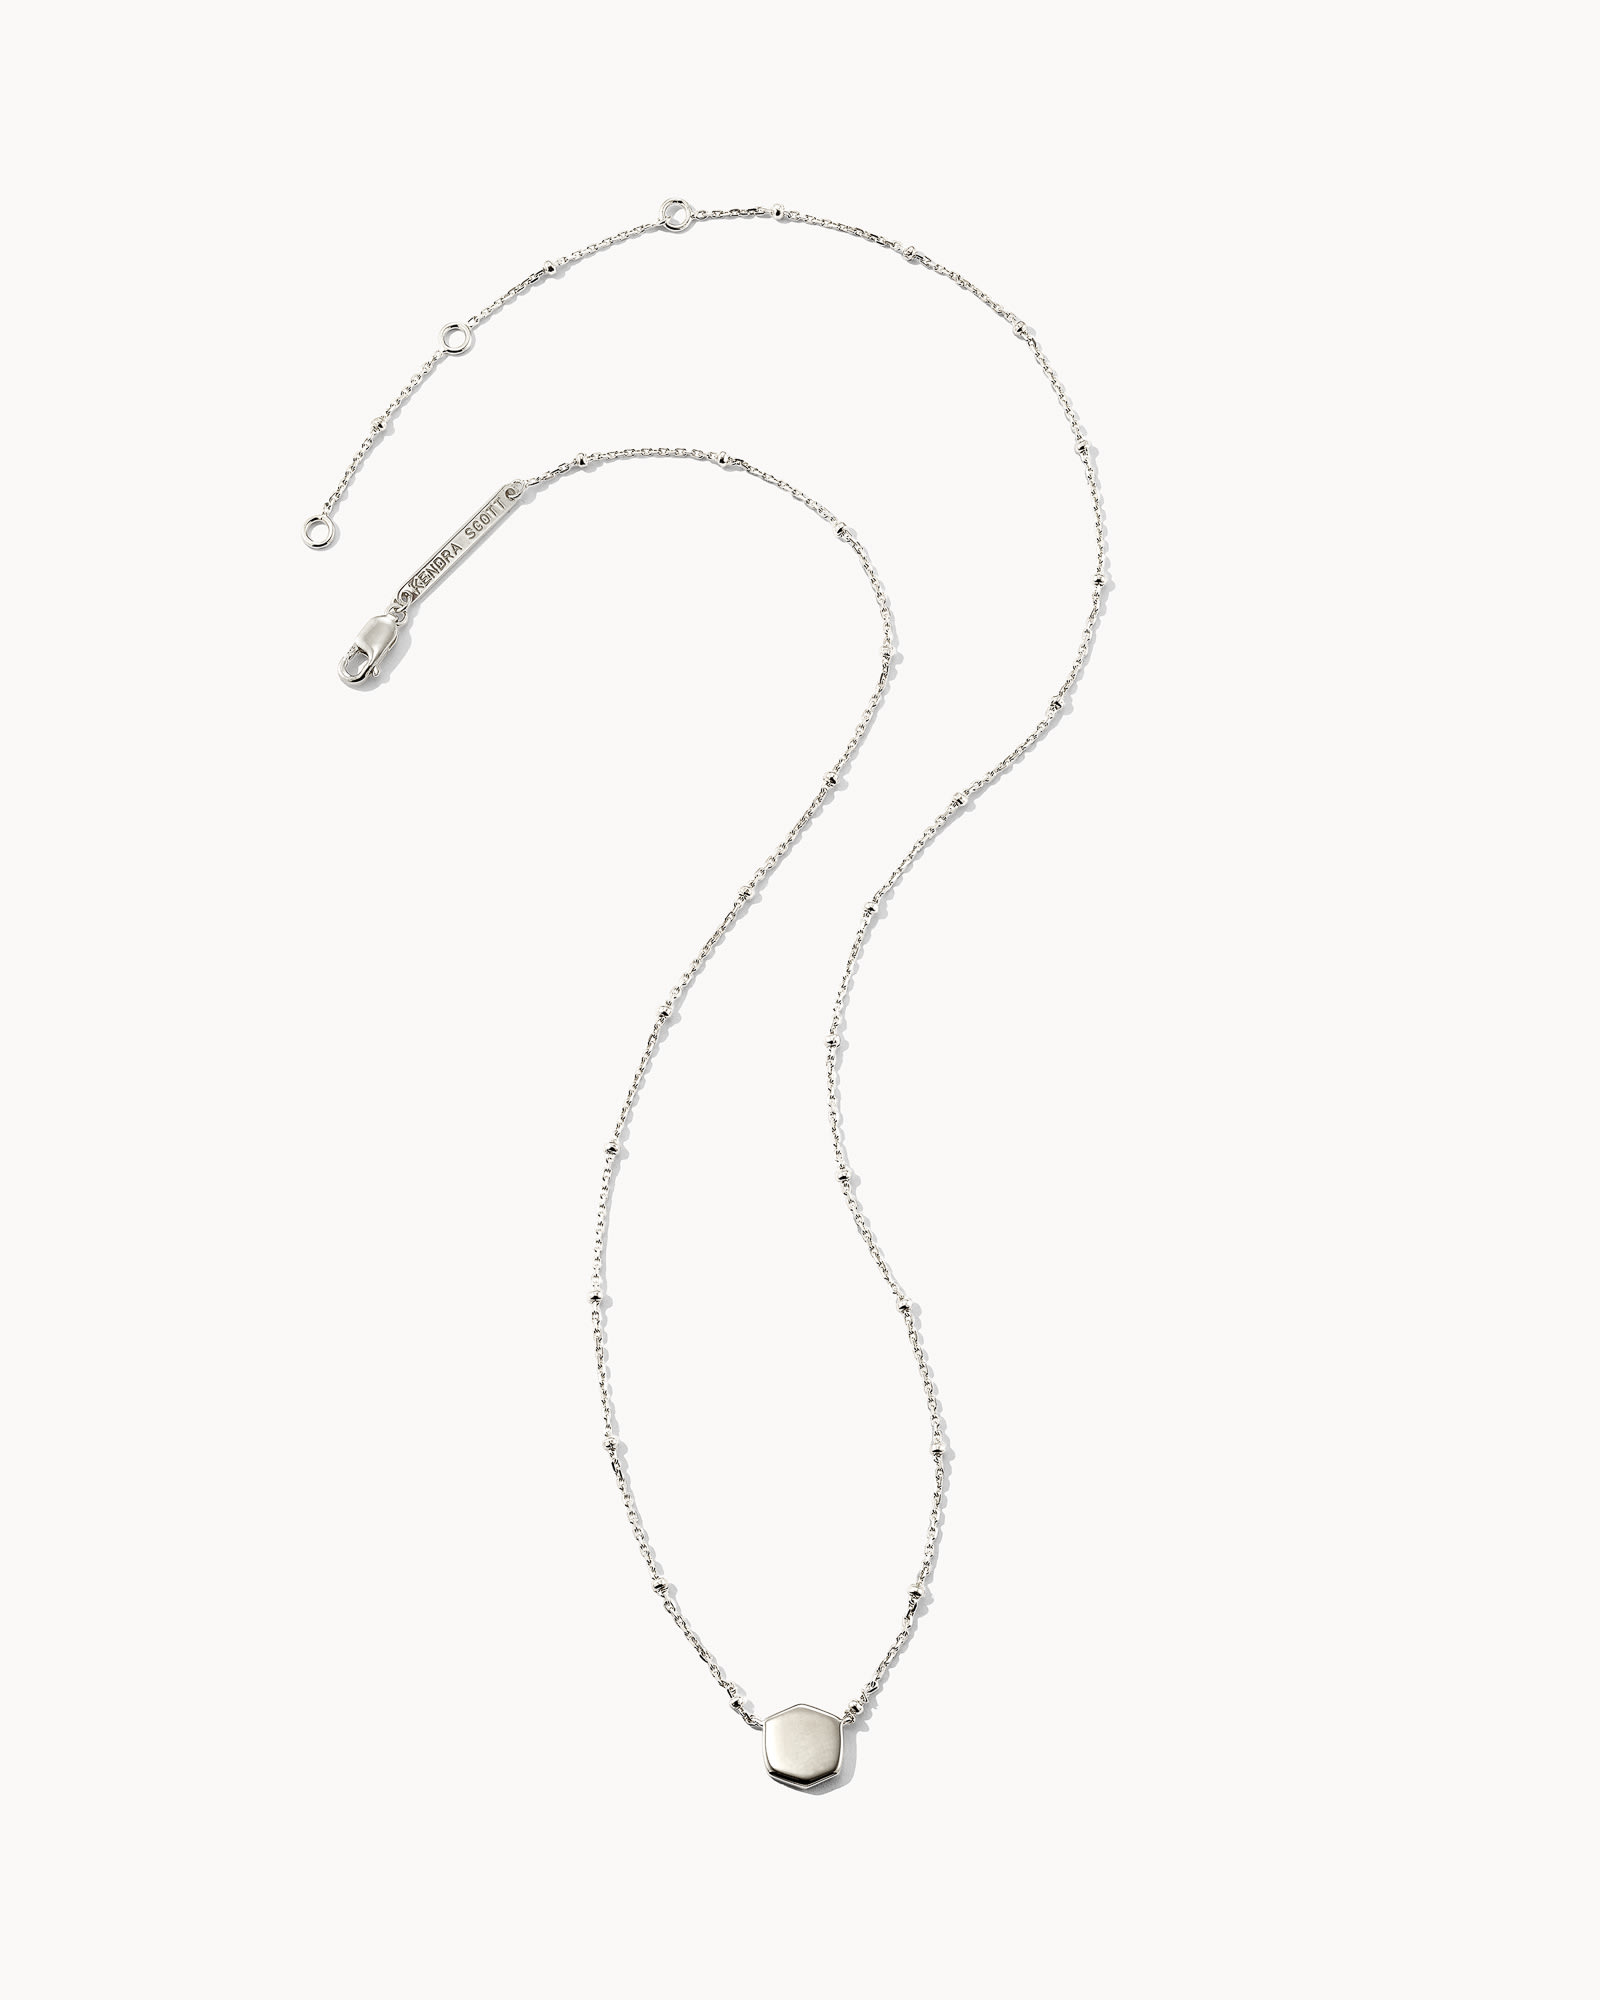 Davis Satellite Pendant Necklace in Sterling Silver